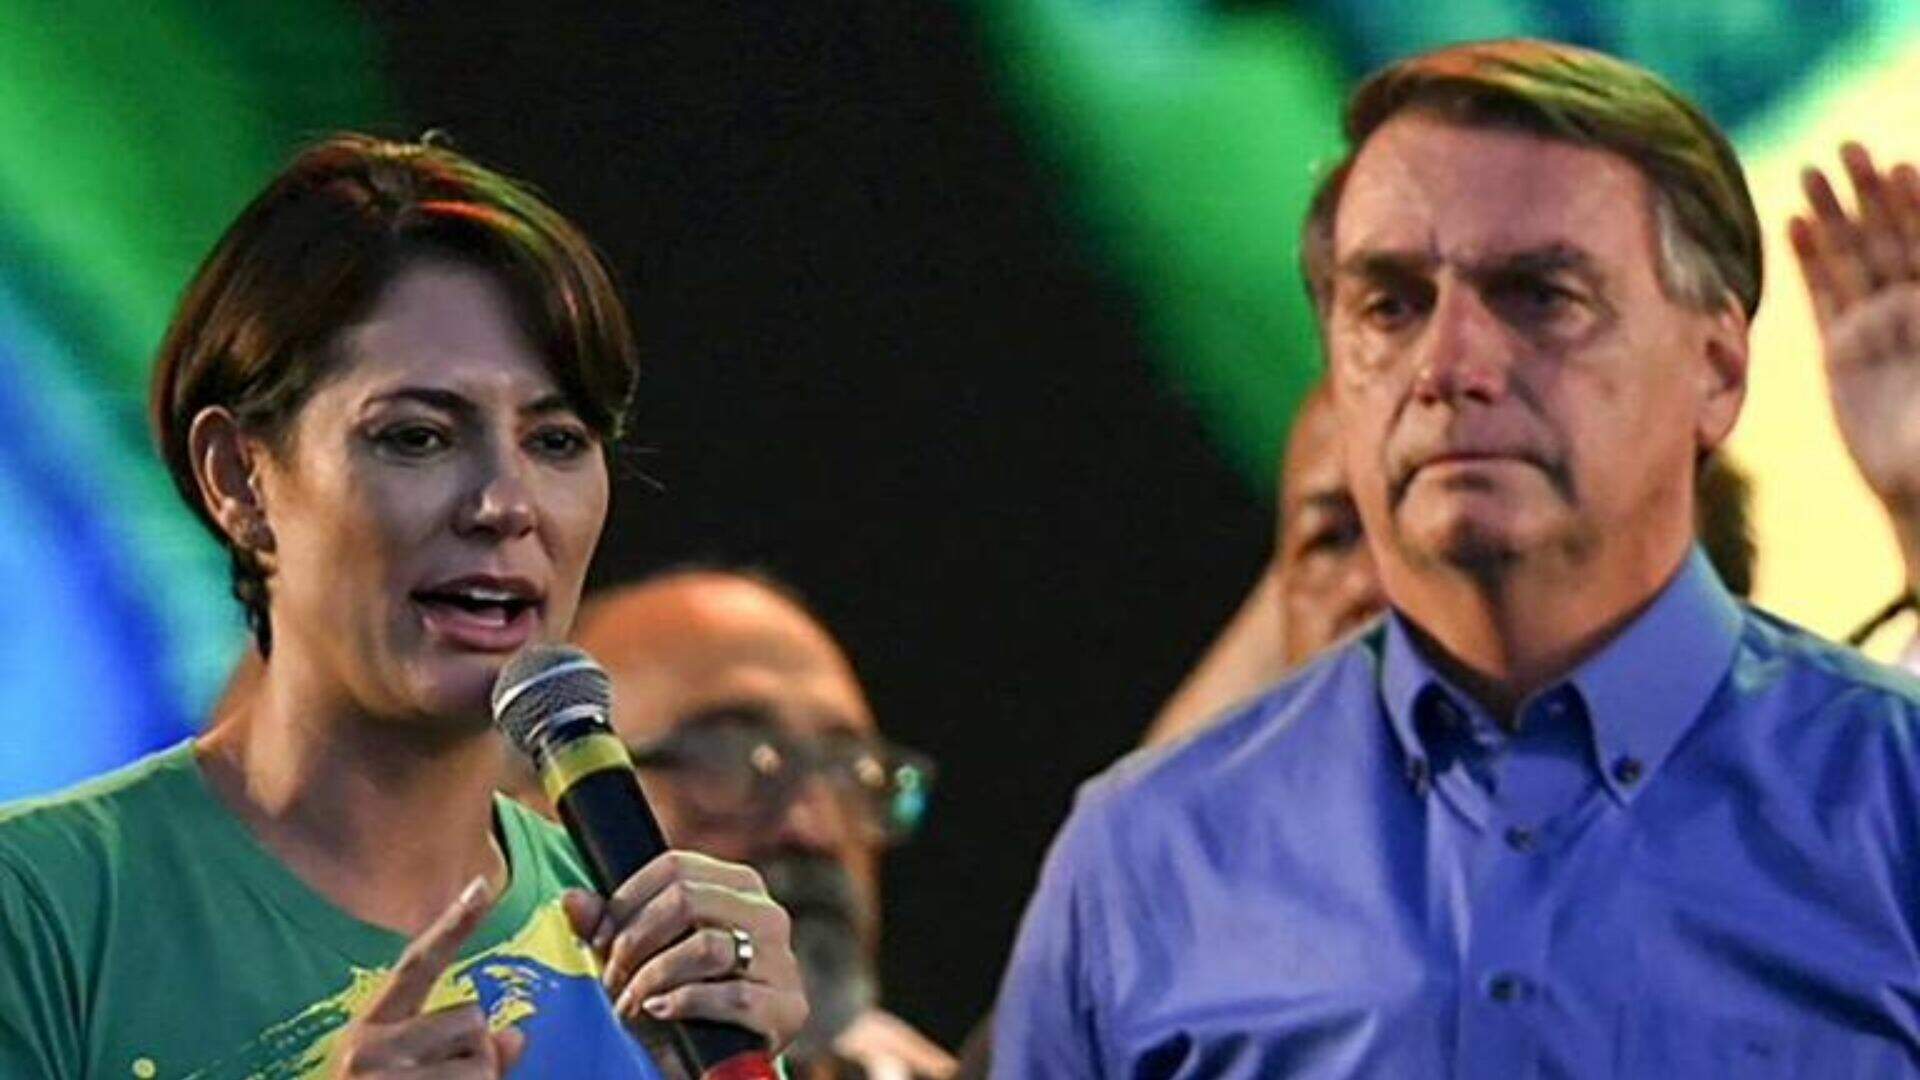 Crise no casamento? Jair Bolsonaro dá unfollow em Michelle após derrota nas urnas